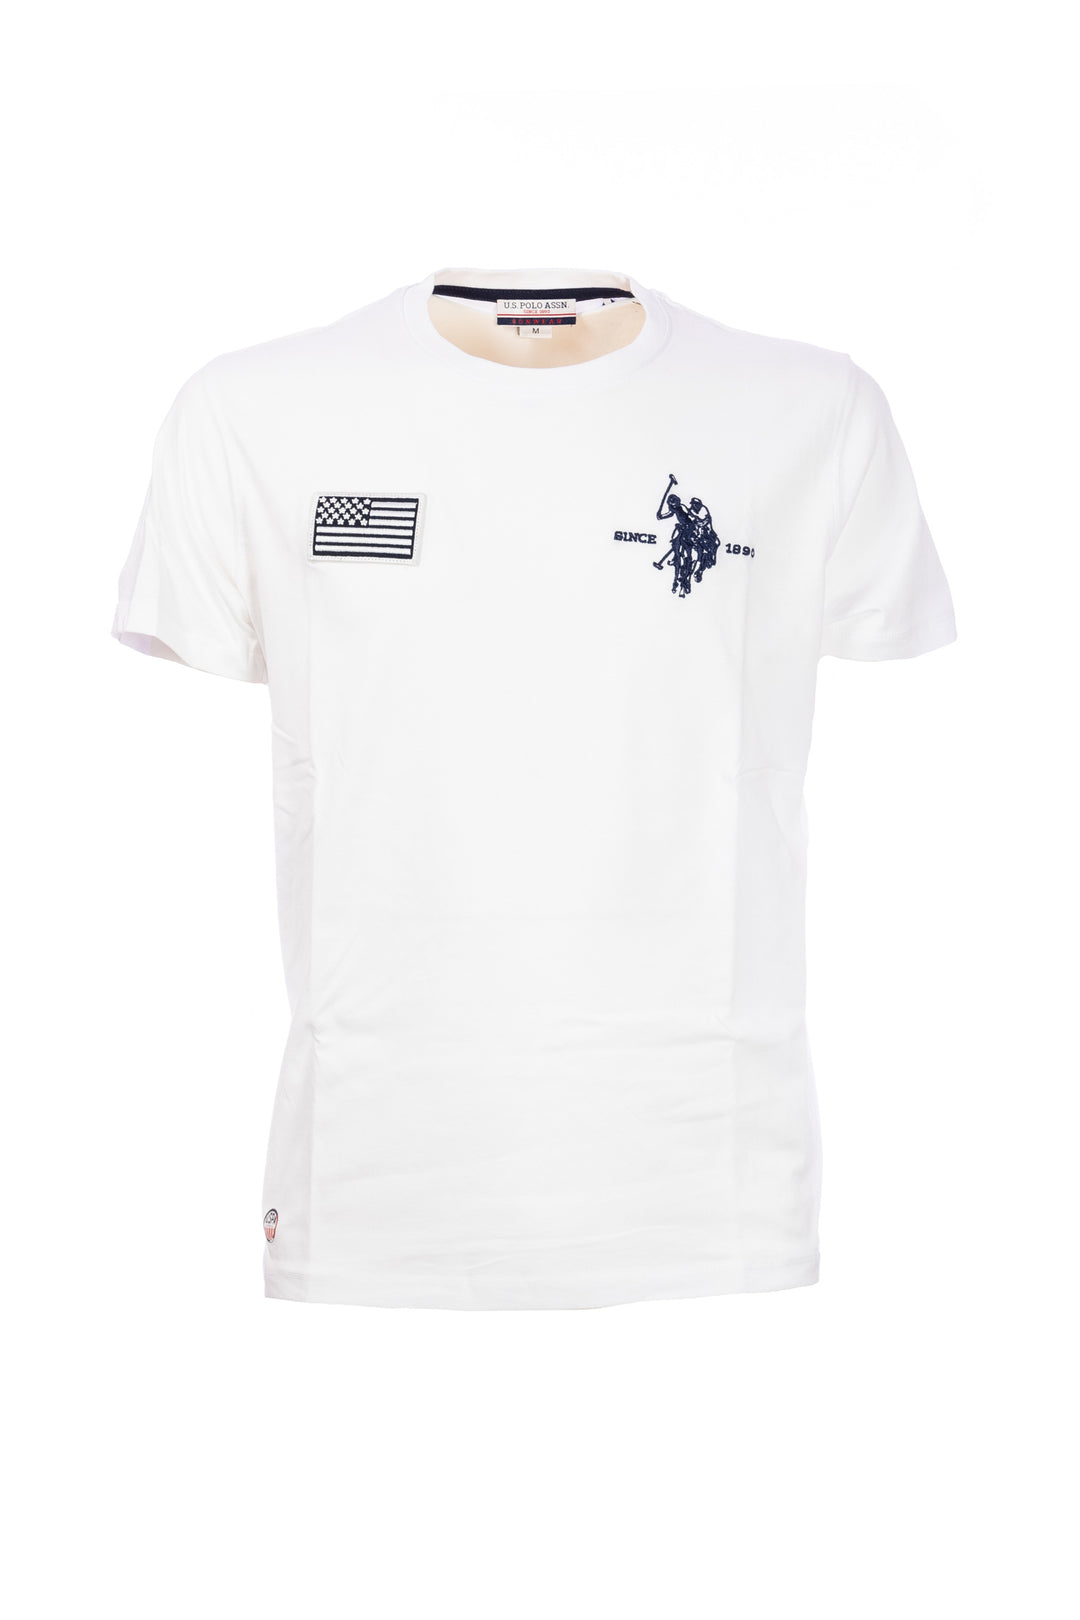 U.S. POLO ASSN. BEACHWEAR T-shirt bianca in cotone con logo e bandiera USA ricamati - Mancinelli 1954